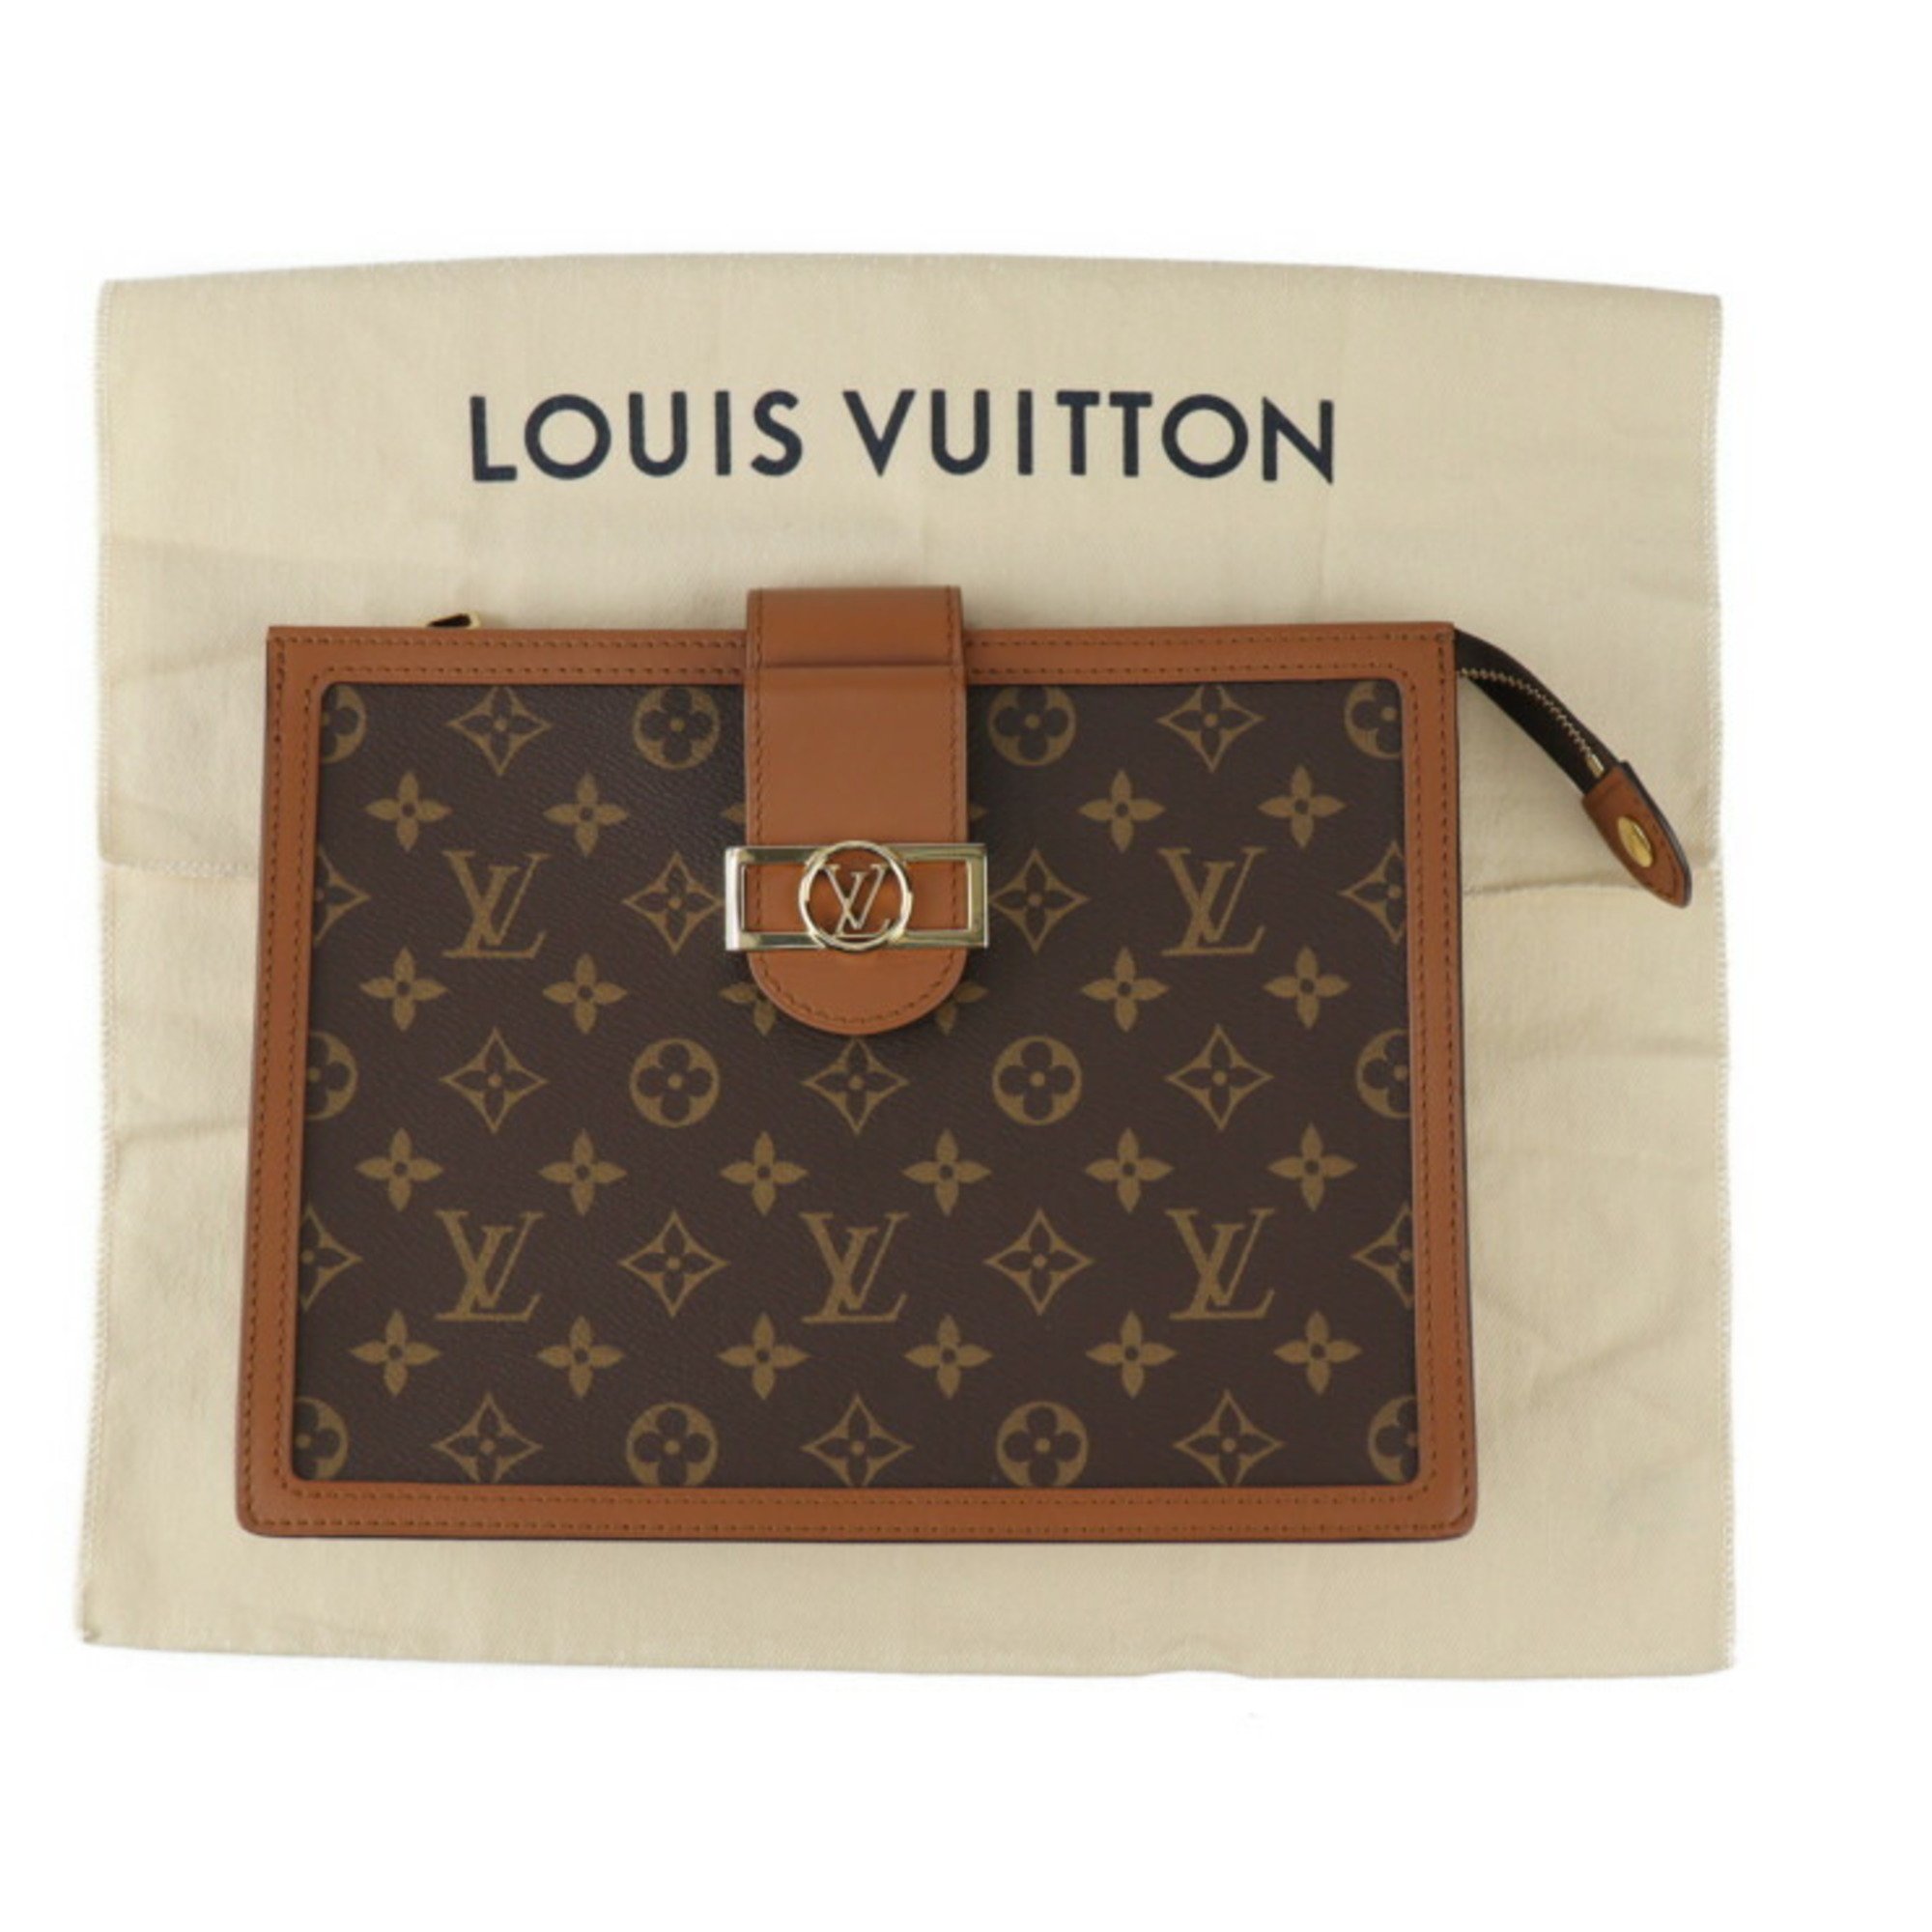 LOUIS VUITTON Louis Vuitton Pochette Dauphine Second Bag M69184 Monogram Reverse Leather Brown Gold Hardware Clutch Pouch